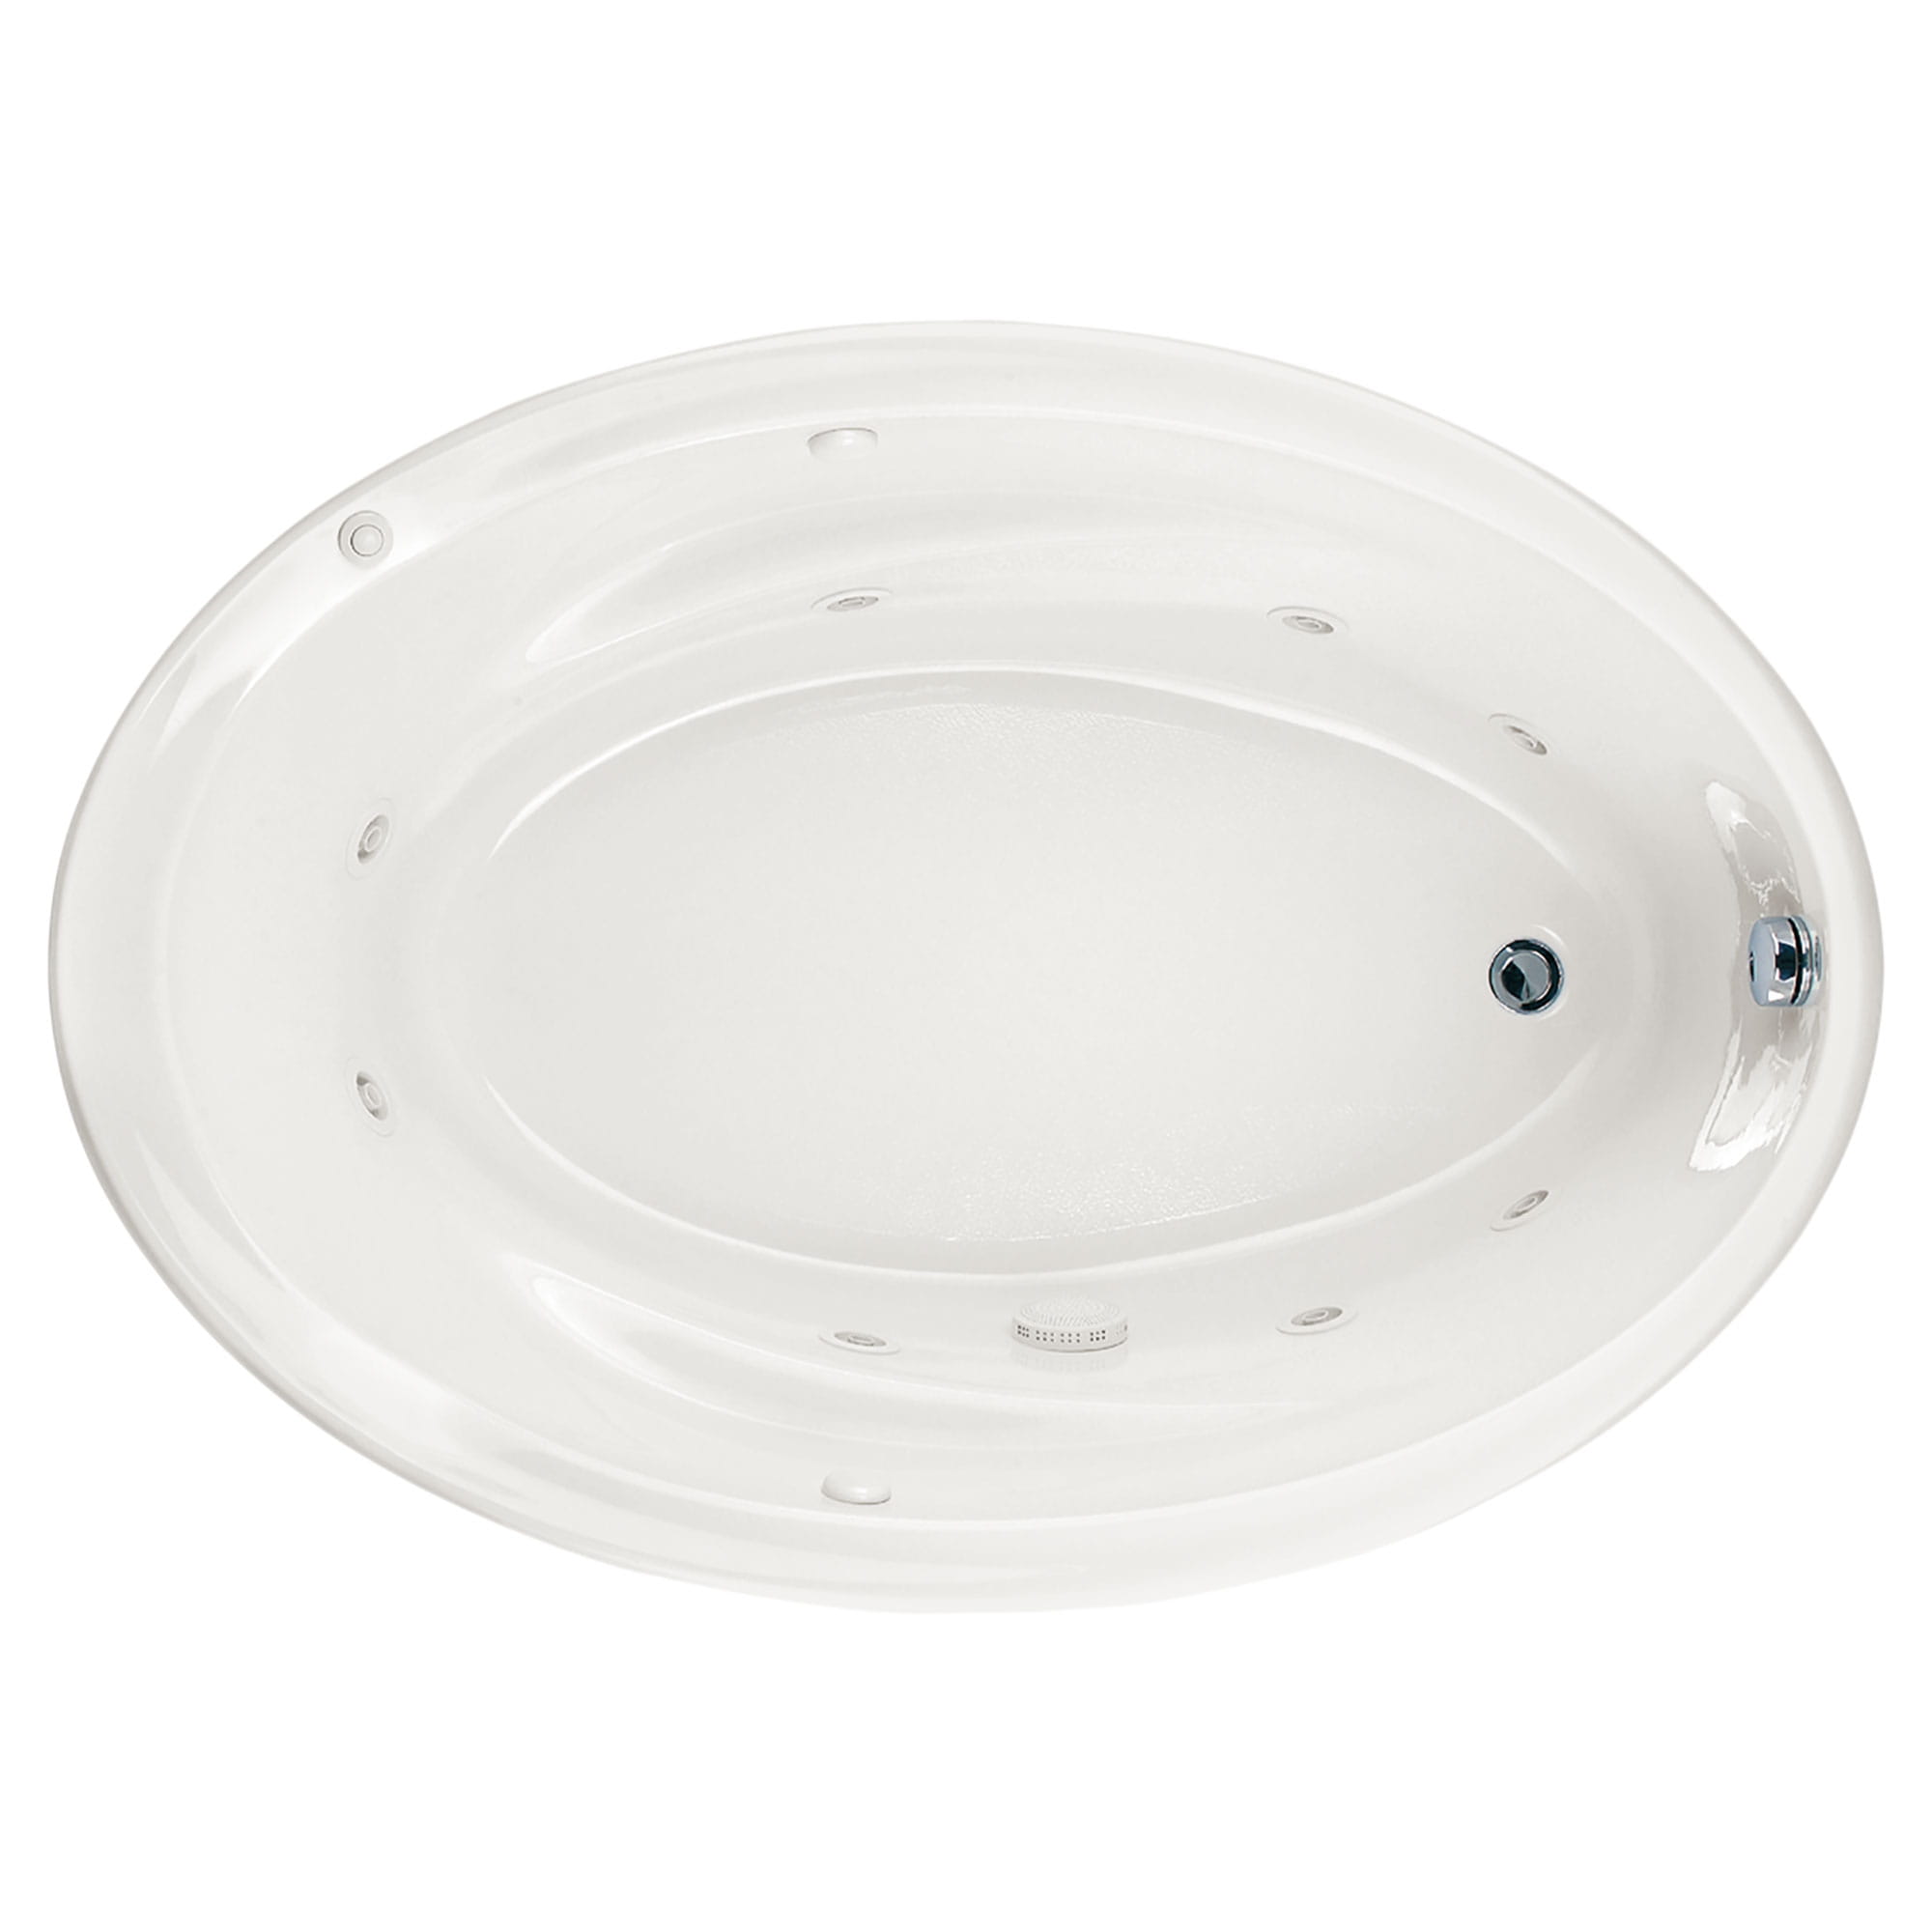 Savona® Oval 60 x 42-Inch Drop-in Bathtub With EverClean® Hydromassage System